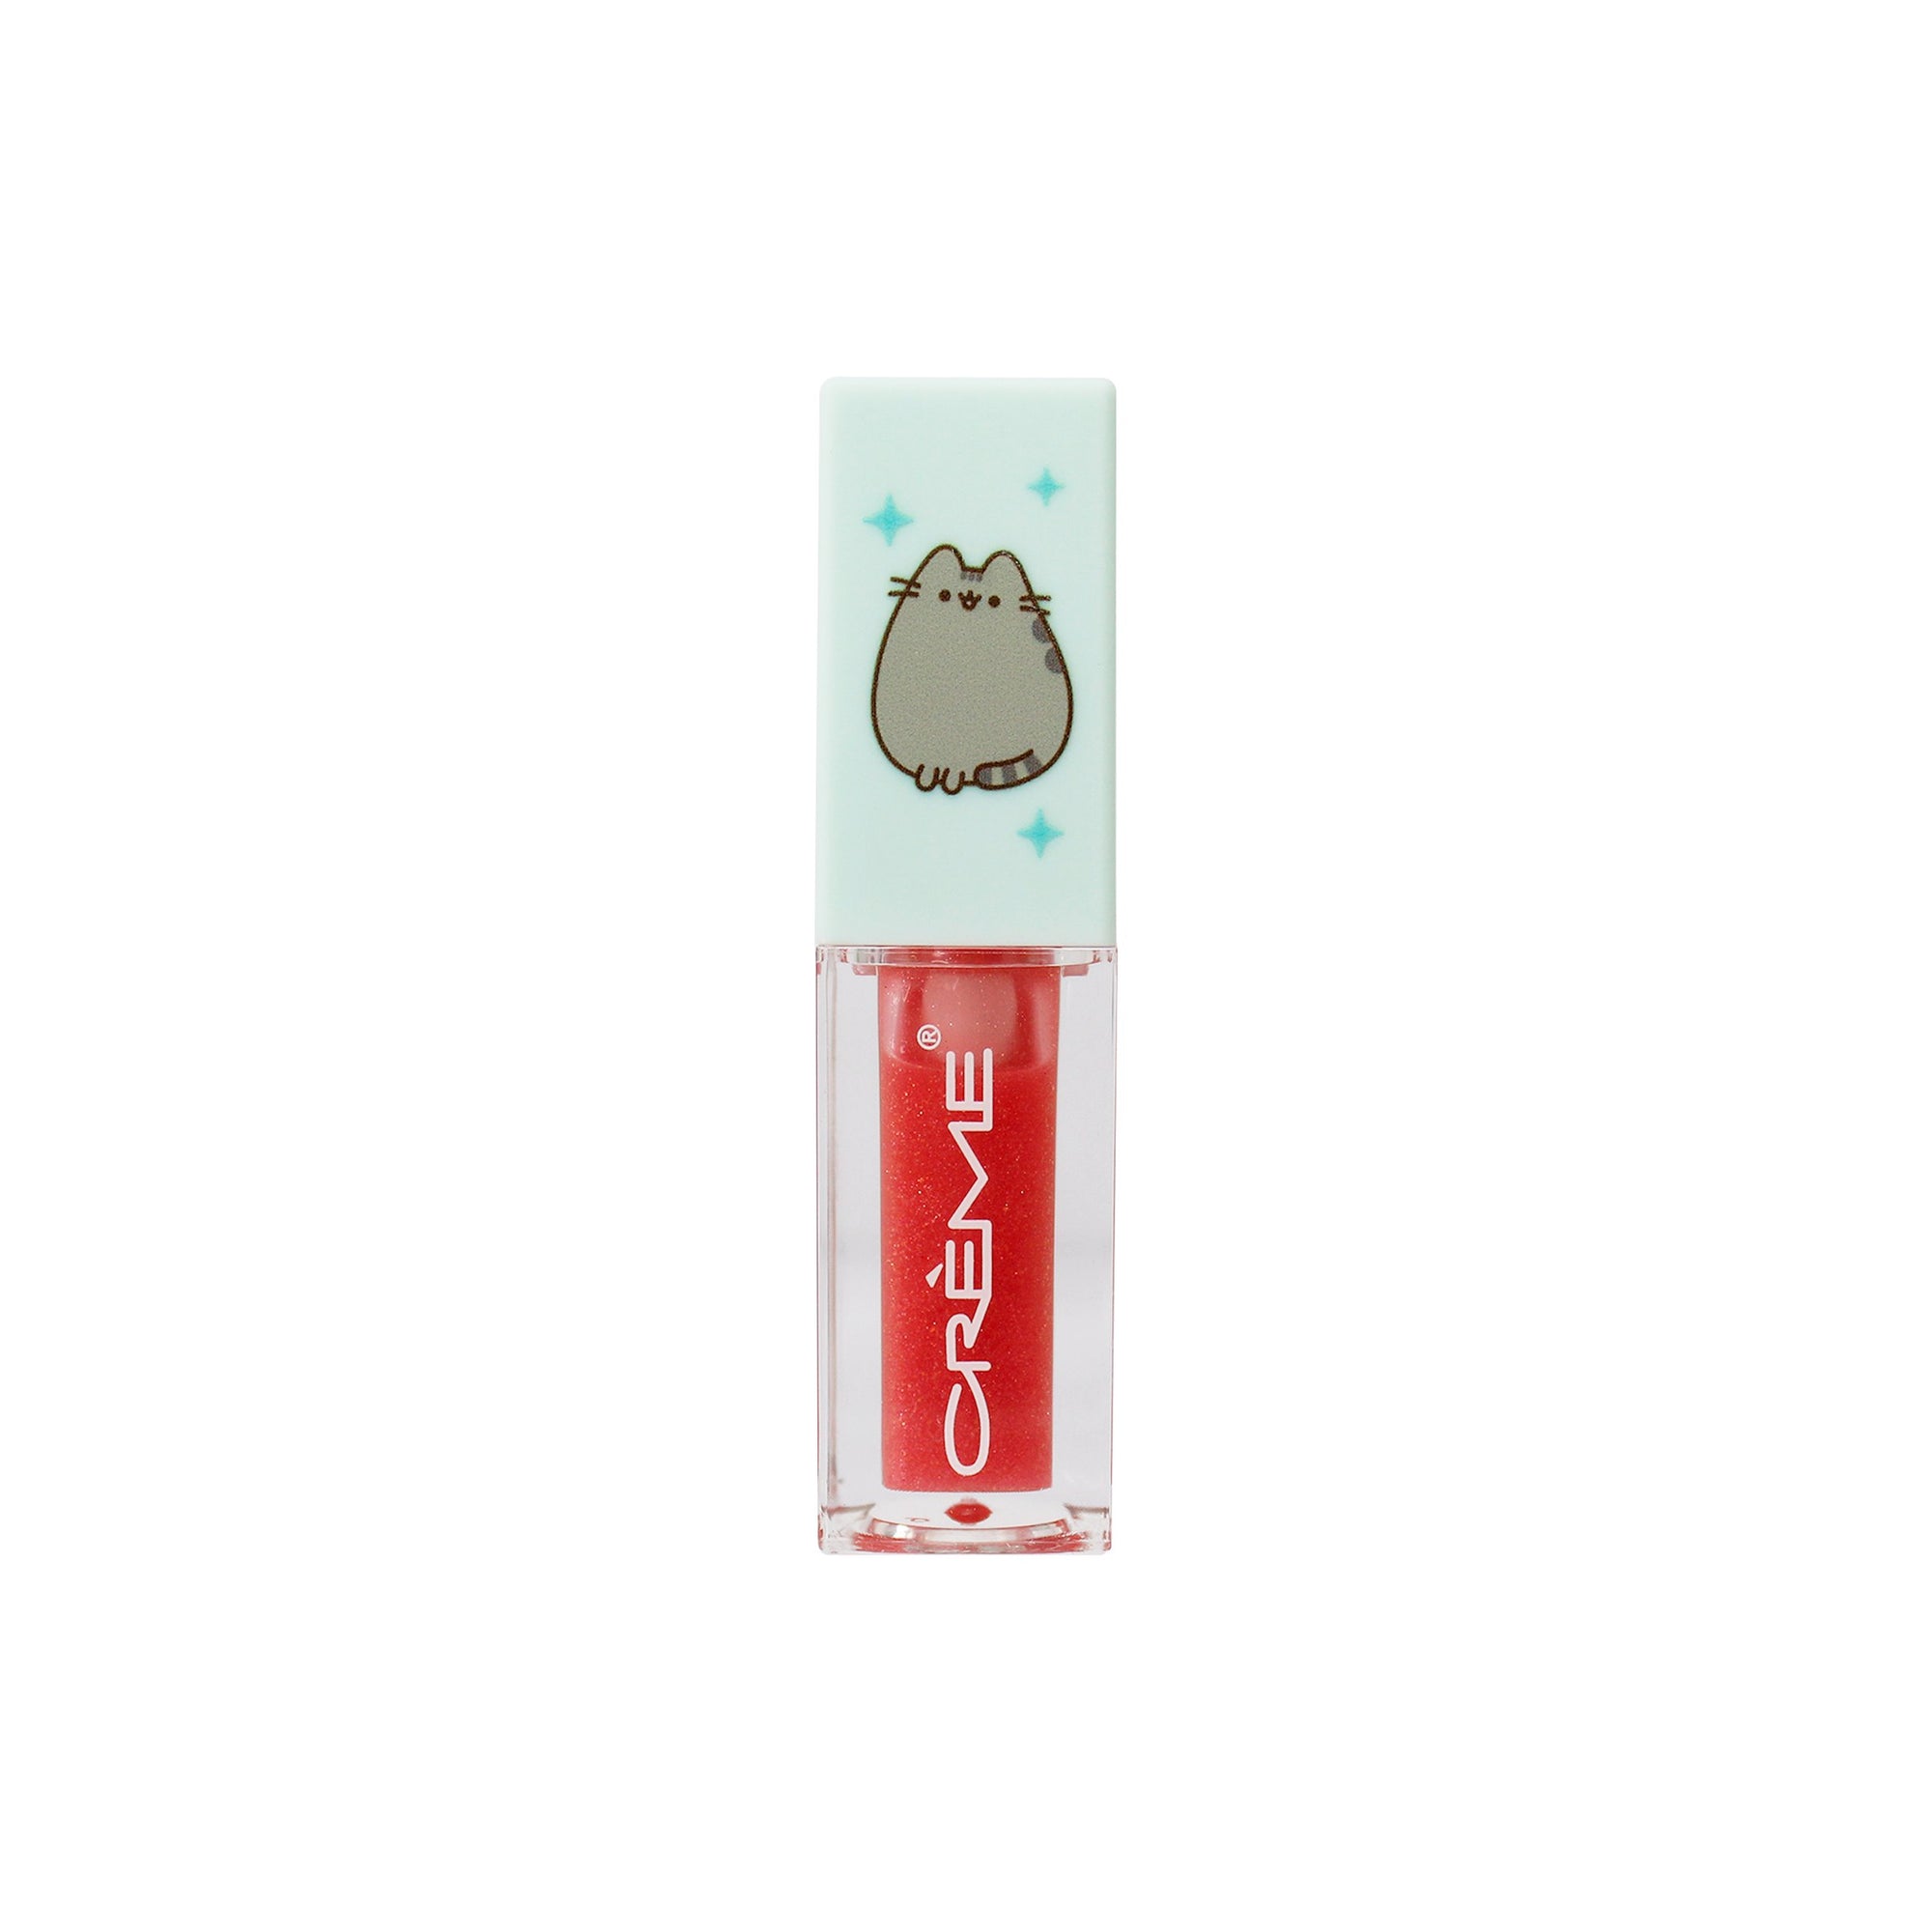 Pusheen Candy Glaze Lip Oil - Twinkle Star Lip Oil The Crème Shop x Pusheen 